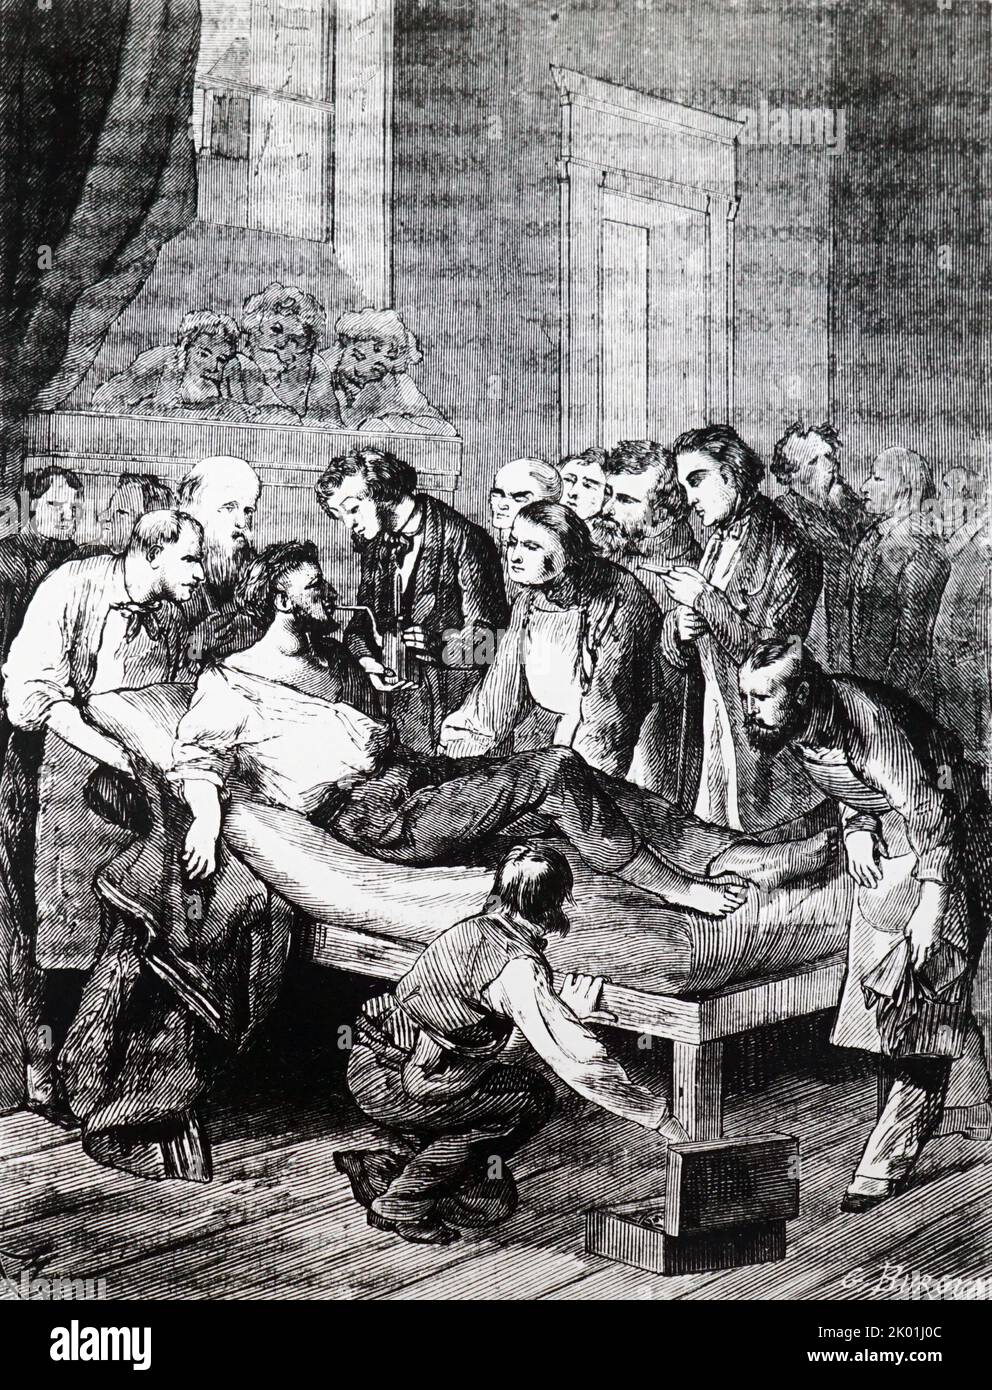 William Morton demonstrating the safety of ether. Massechusettes General Hospital, 1846. From Louis Figuier Les Merveilles de la Science, Paris, nd. c1870. Stock Photo